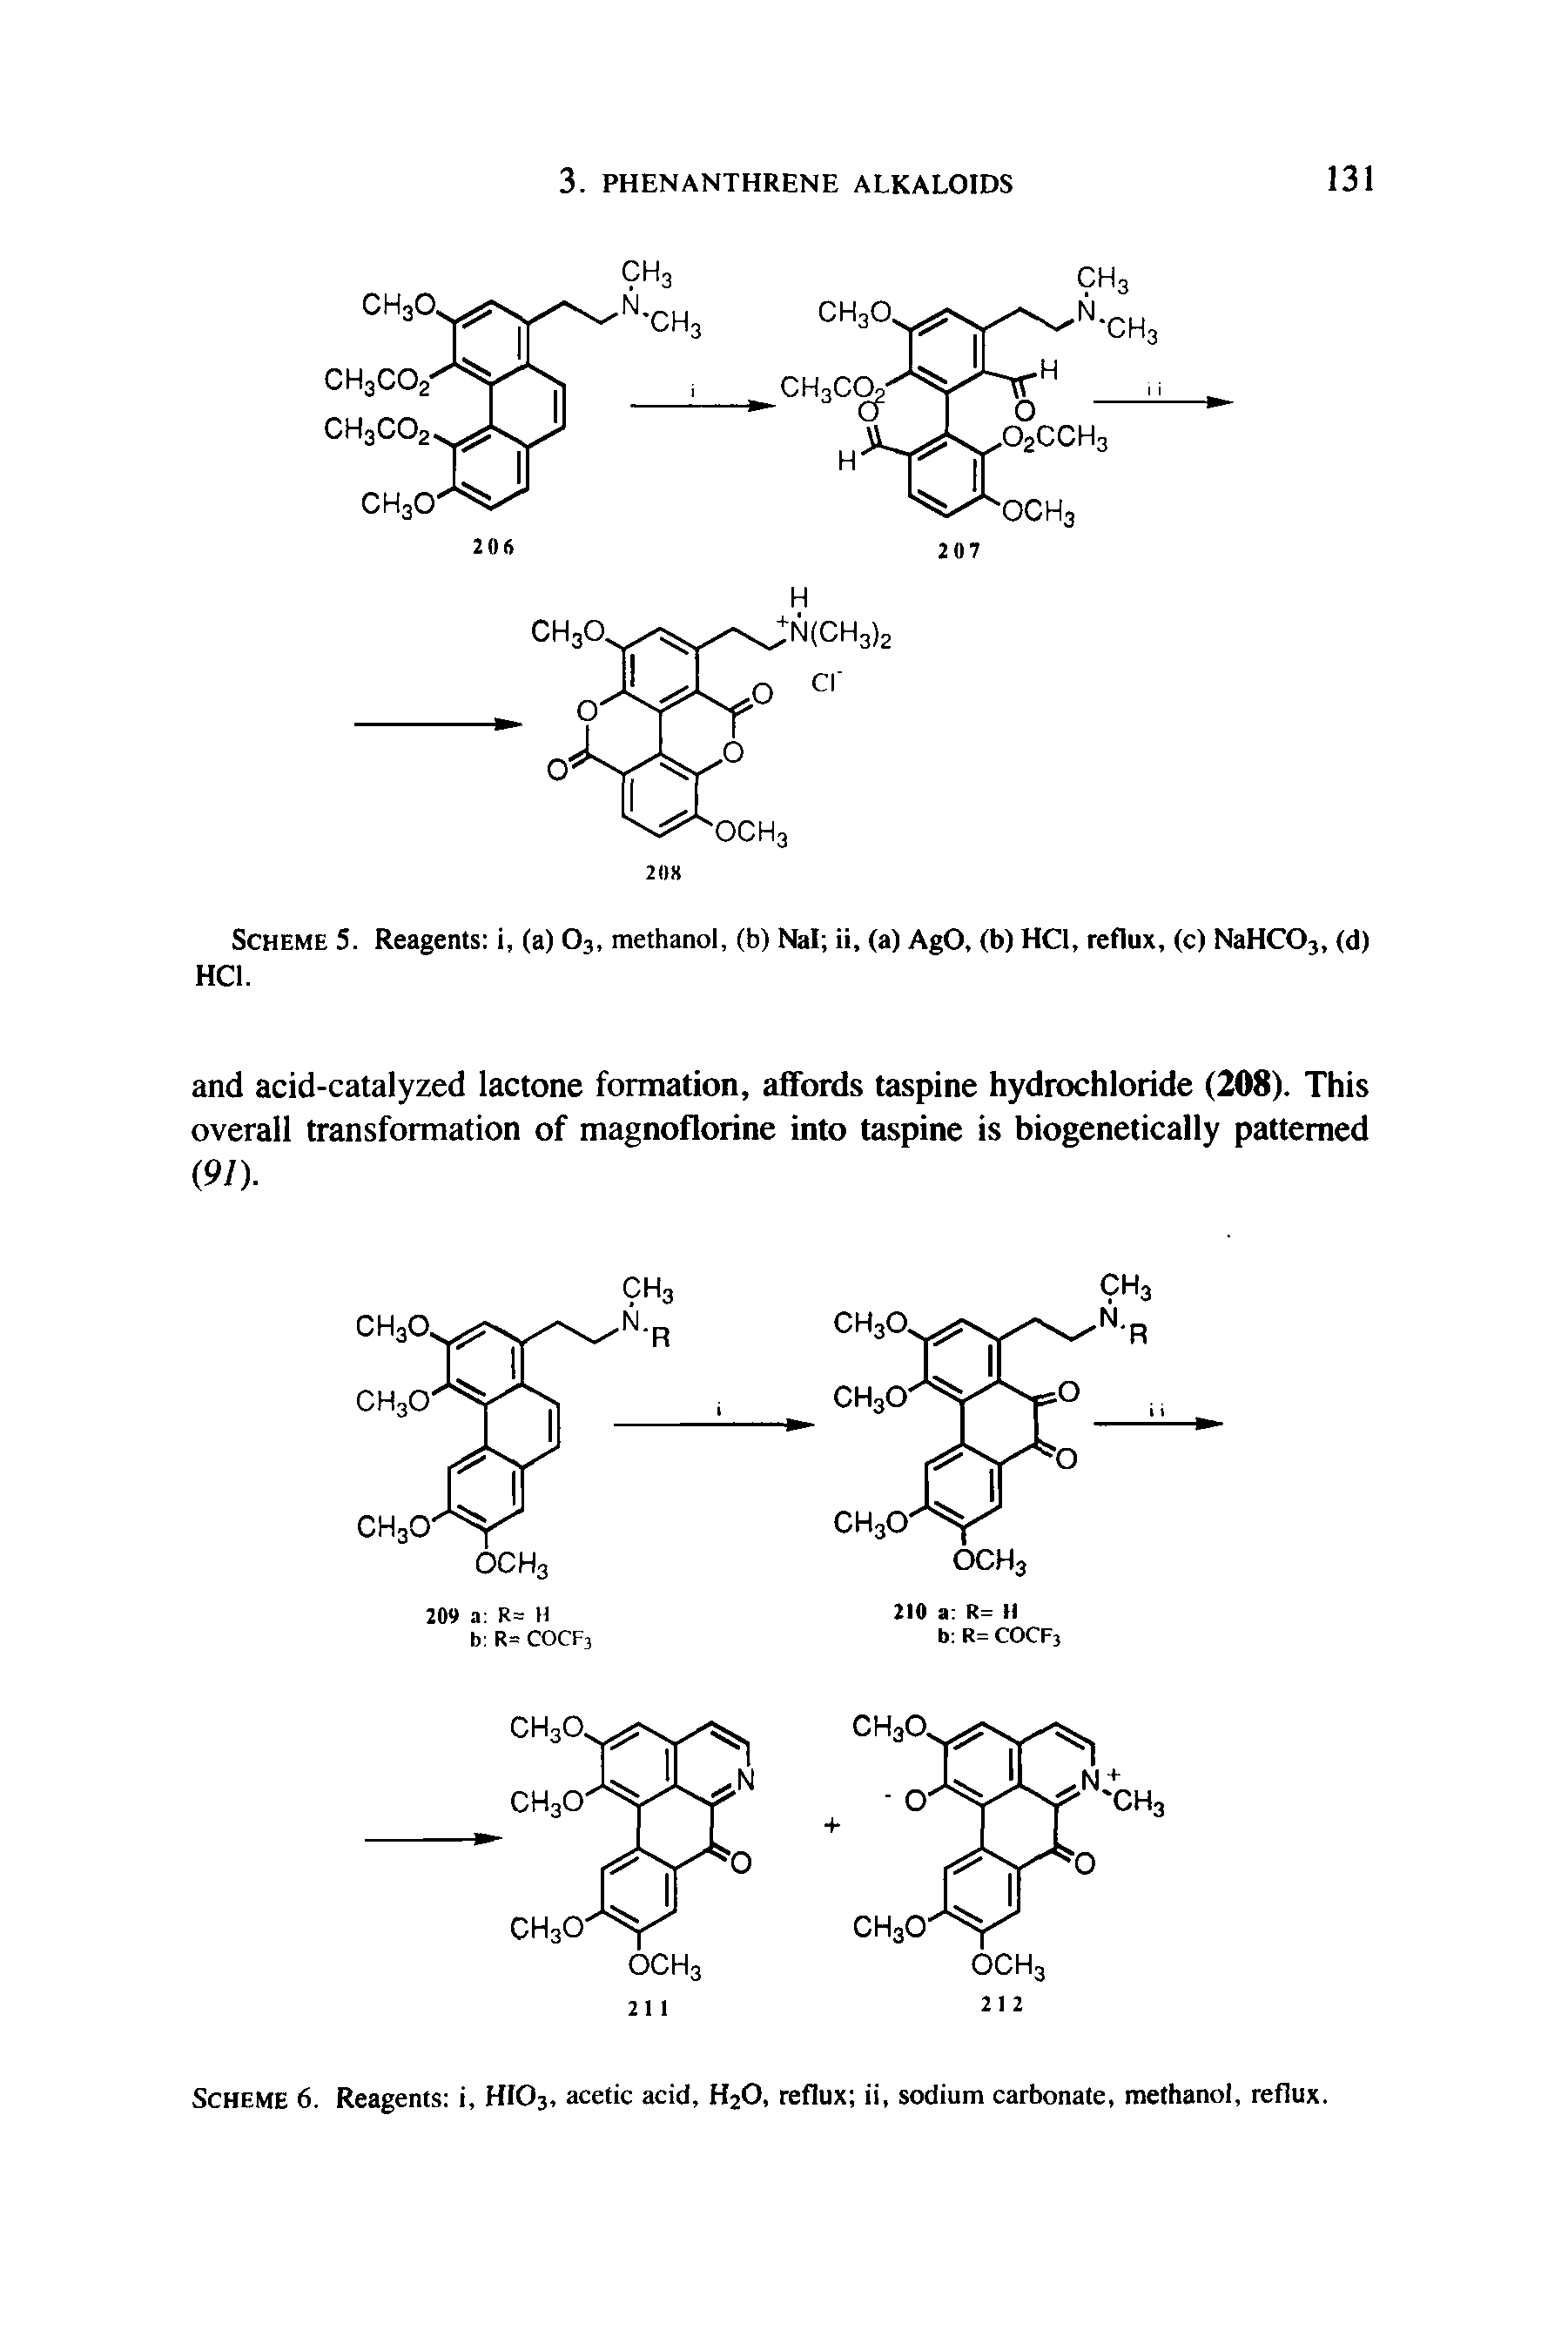 Scheme 6. Reagents i, HIOs, acetic acid, H2O, reflux ii, sodium carbonate, methanol, reflux.